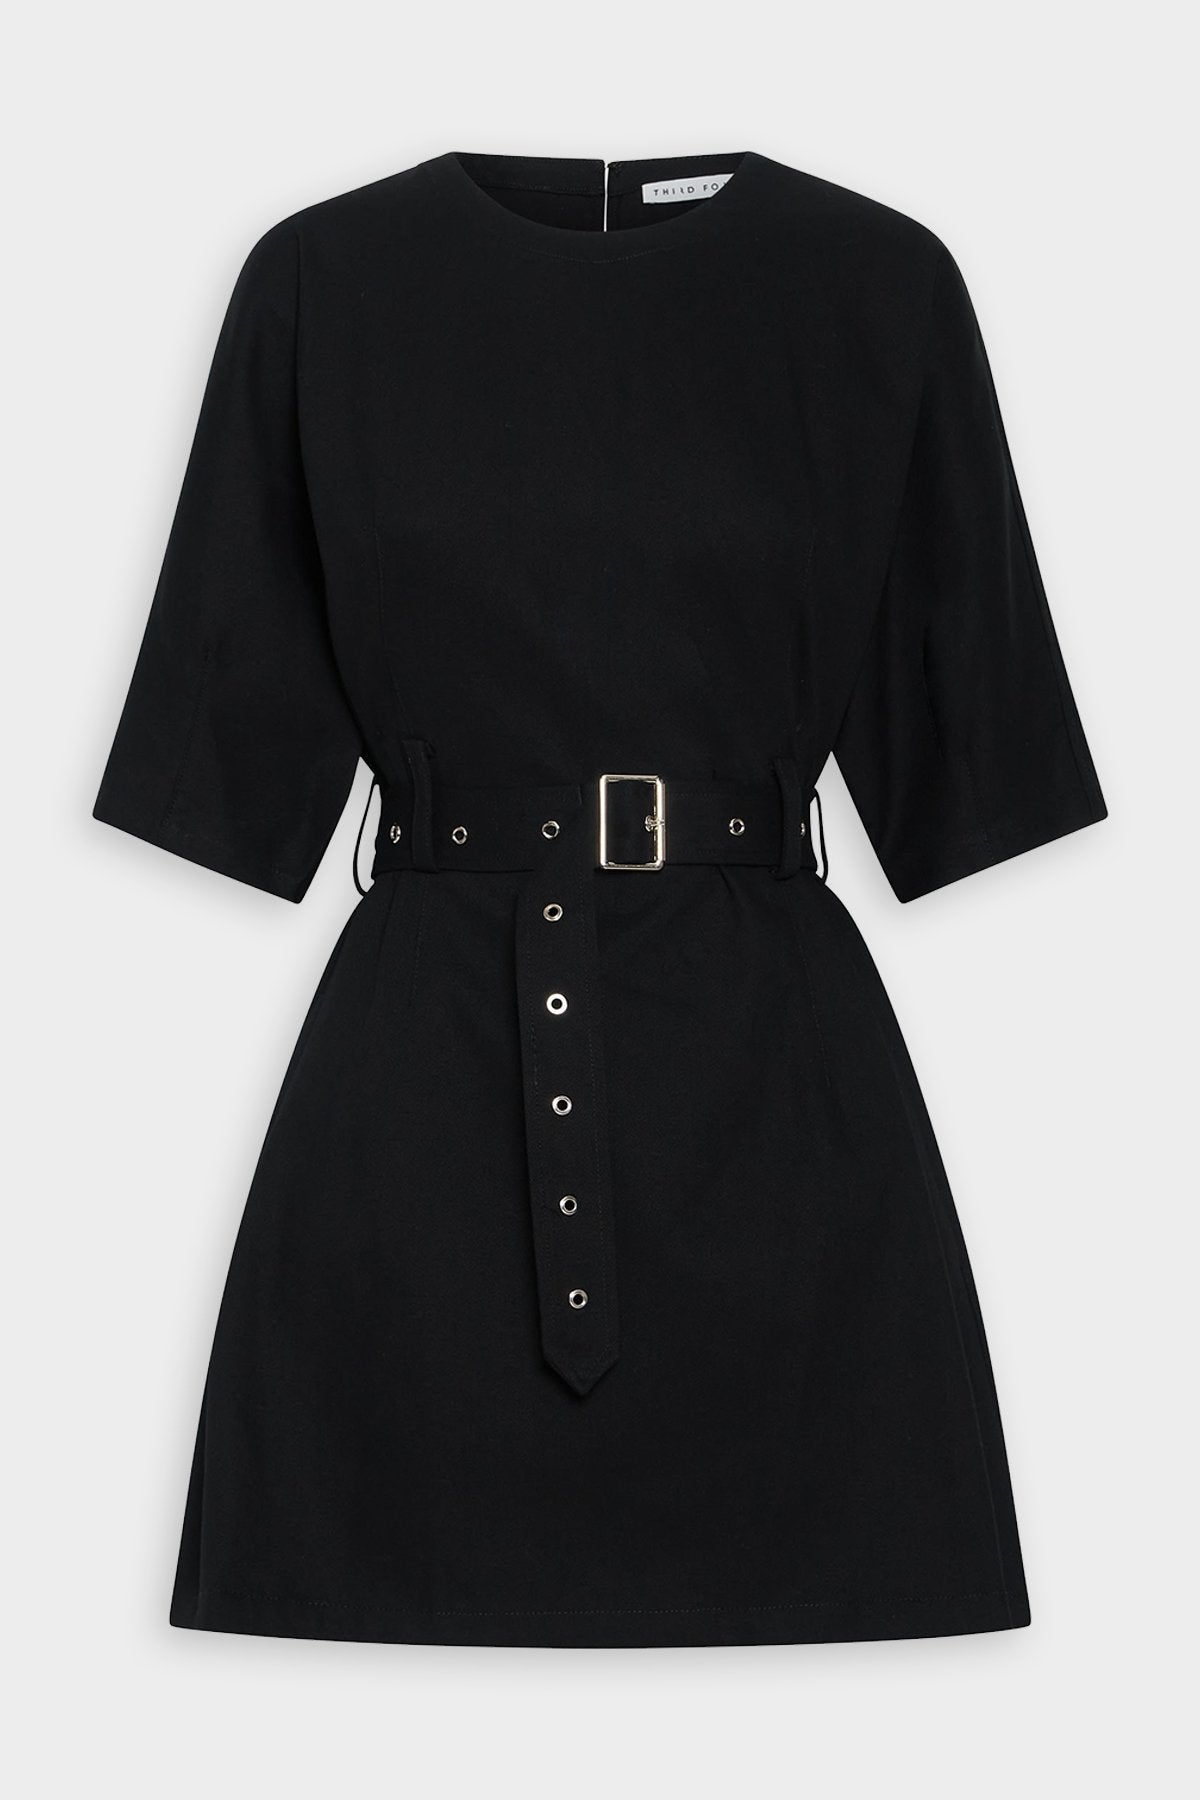 Buckle Up Tee Mini Dress in Black - shop-olivia.com